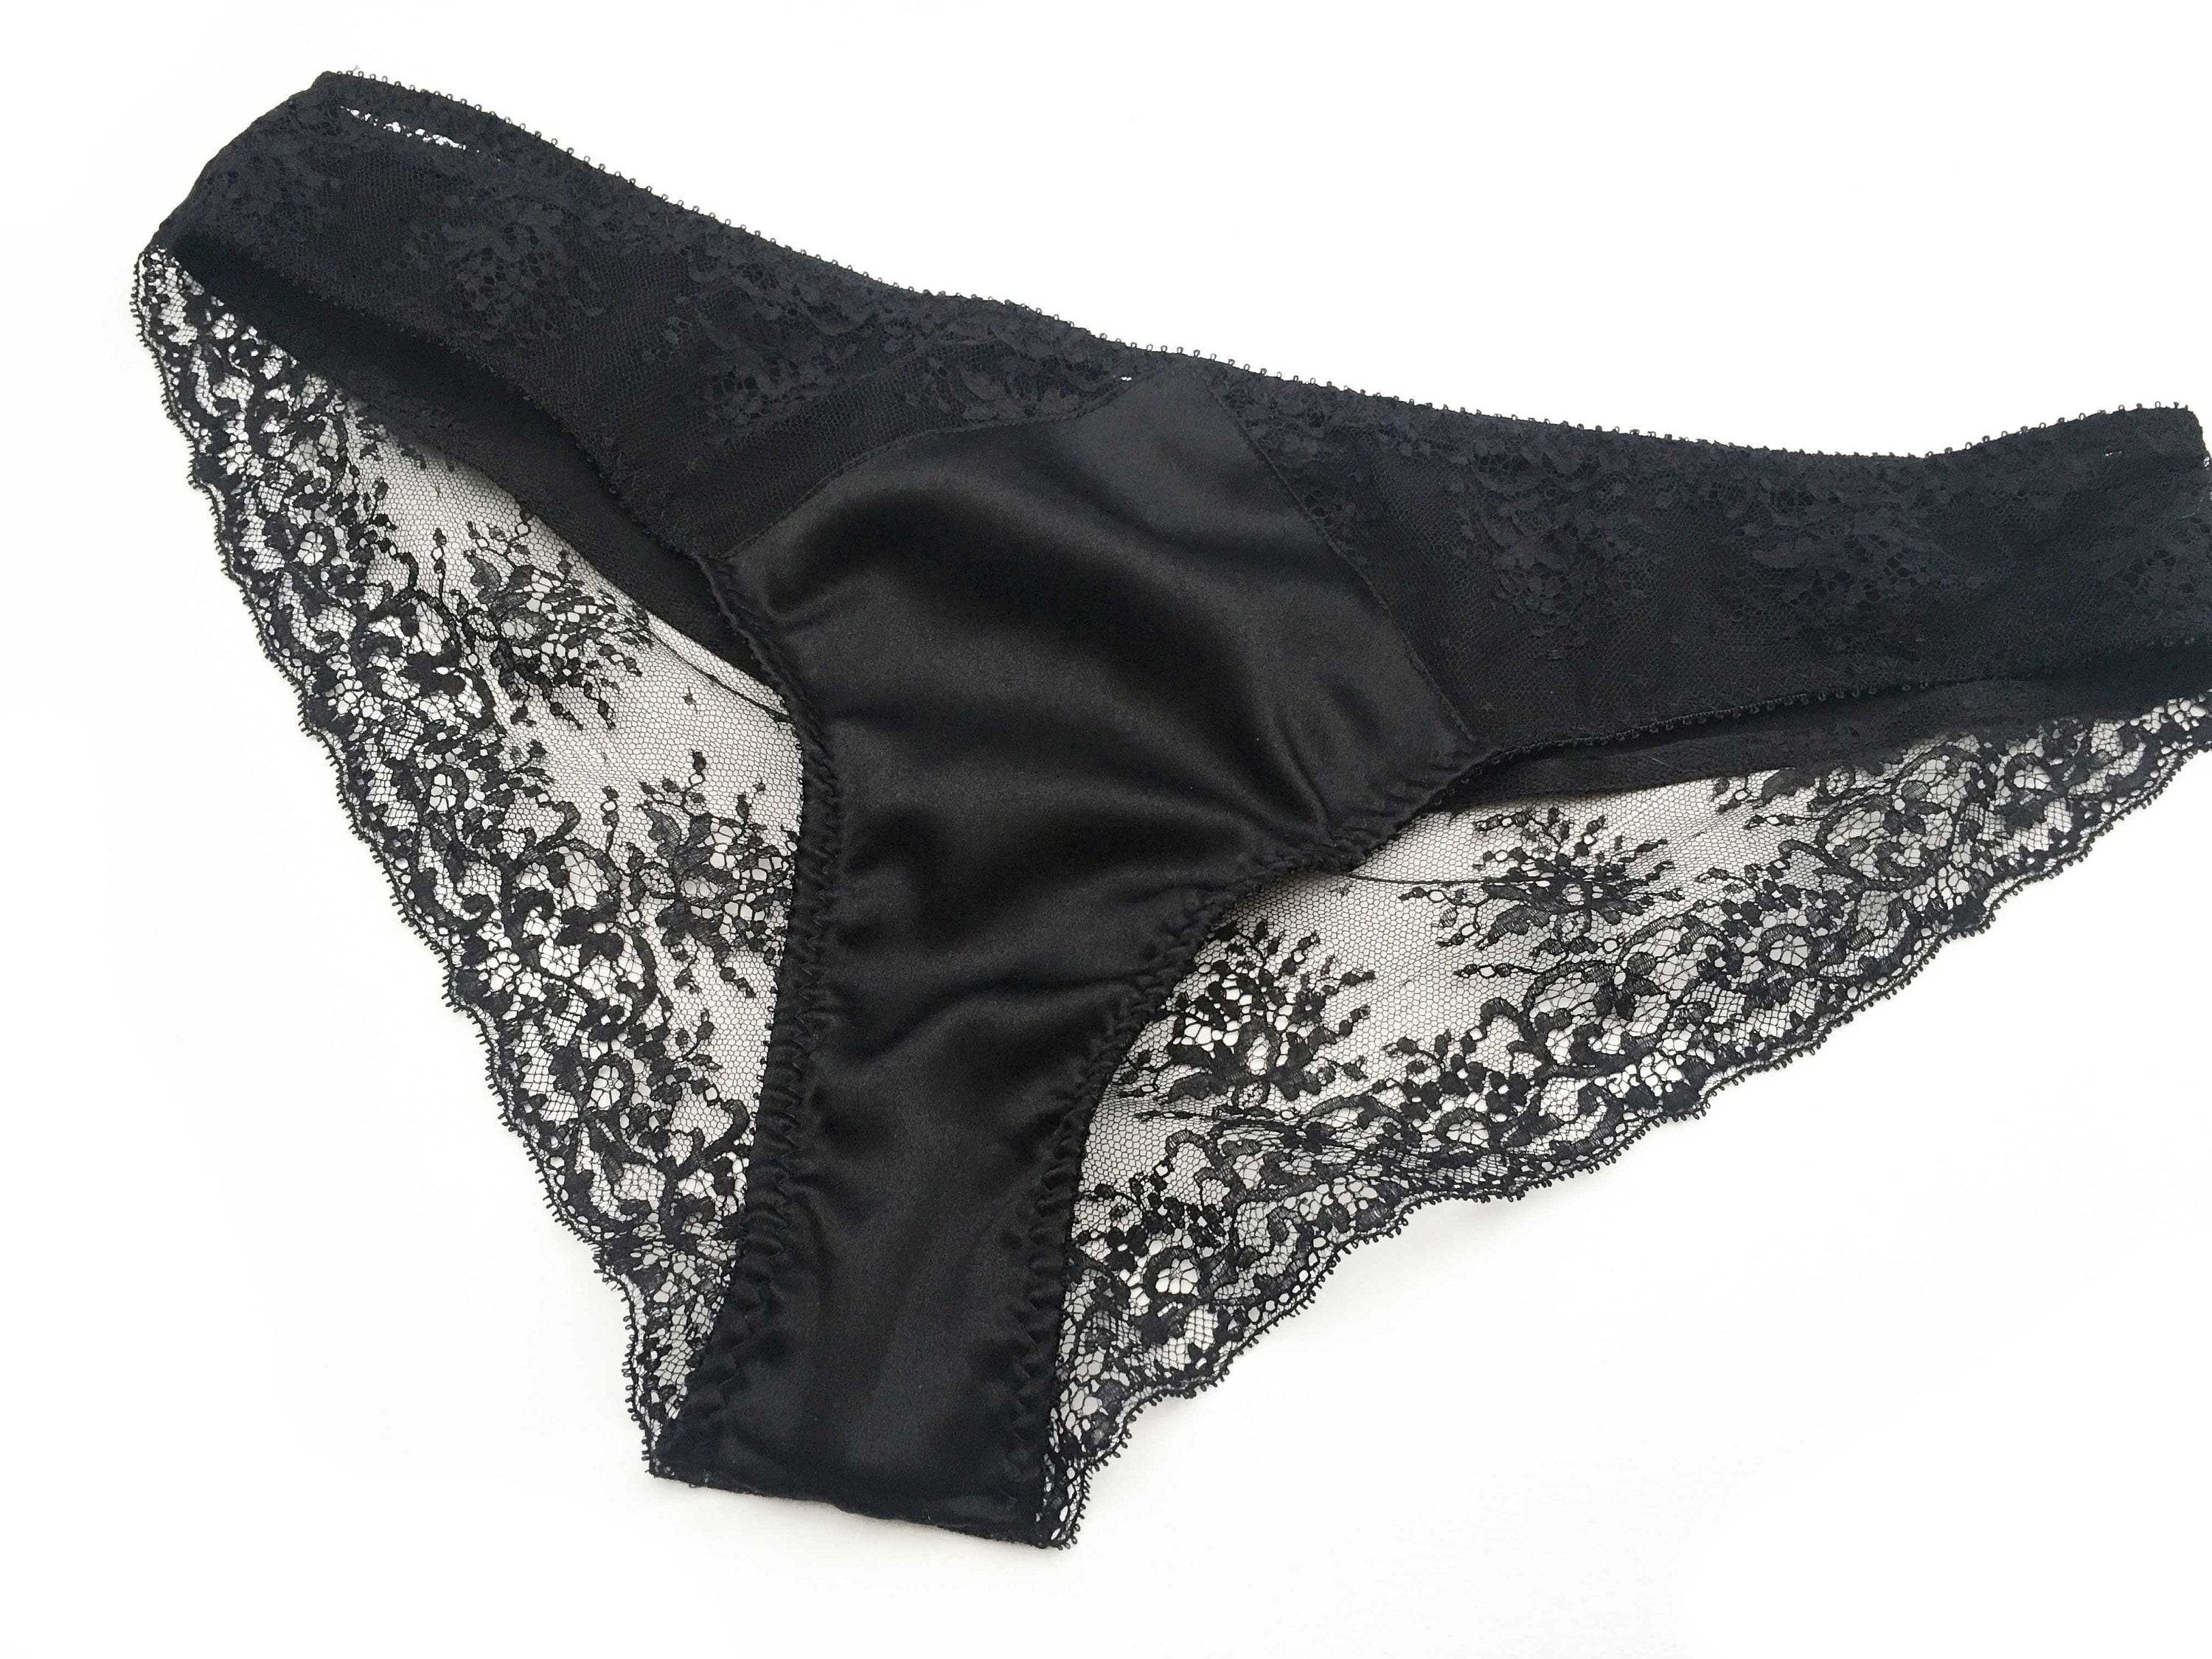 colleen gerrity recommends black panties pics pic